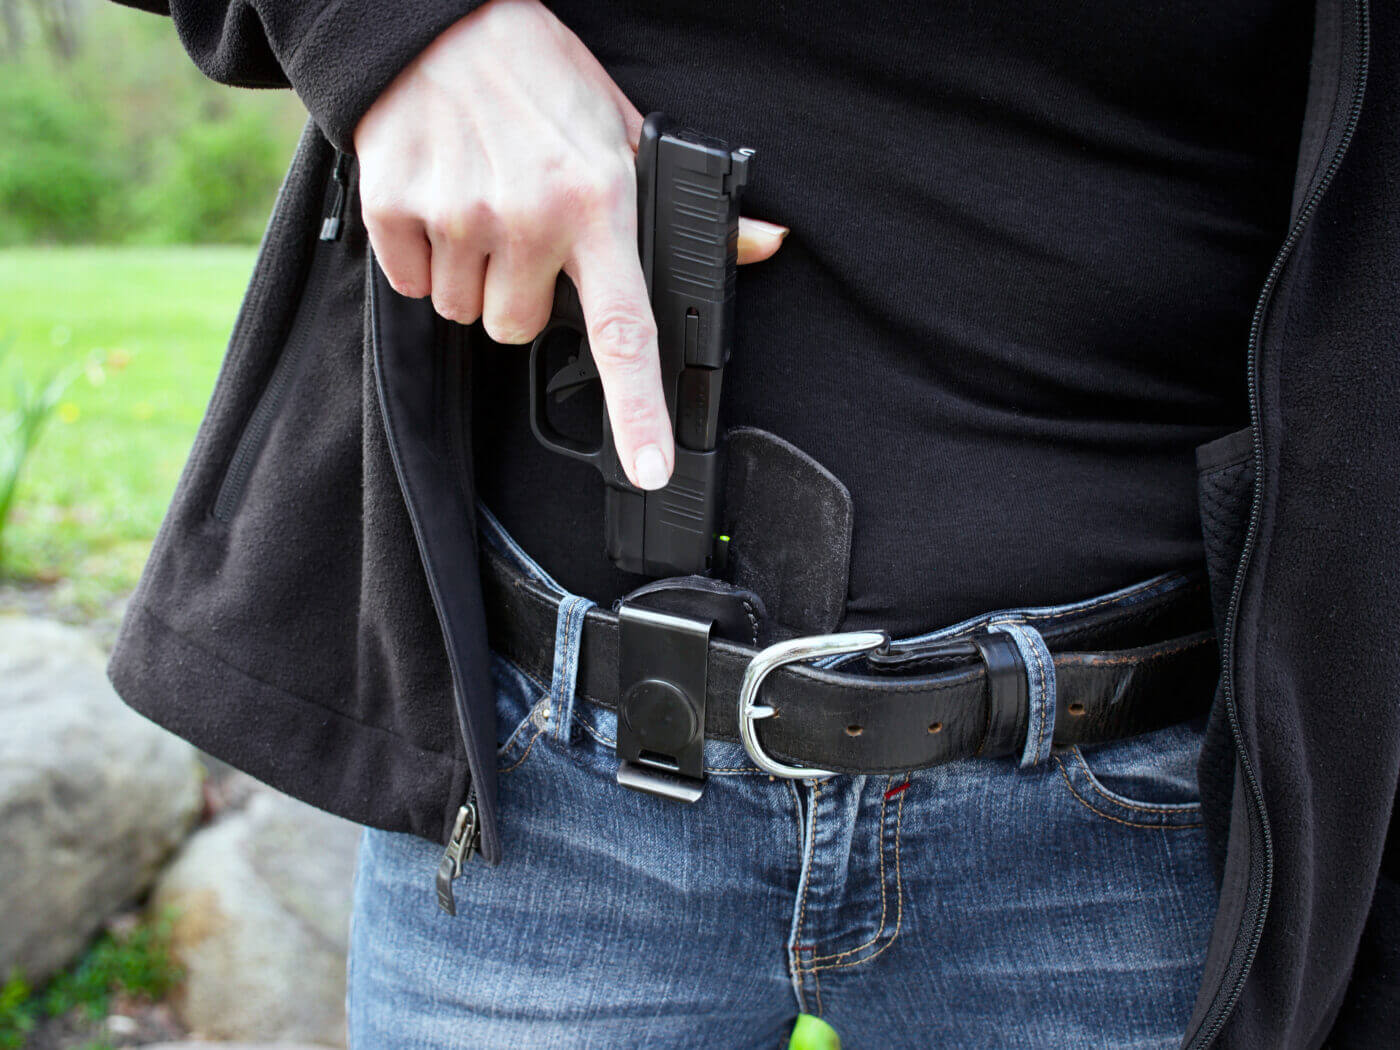 Carrying a Hellcat pistol in an appendix holster